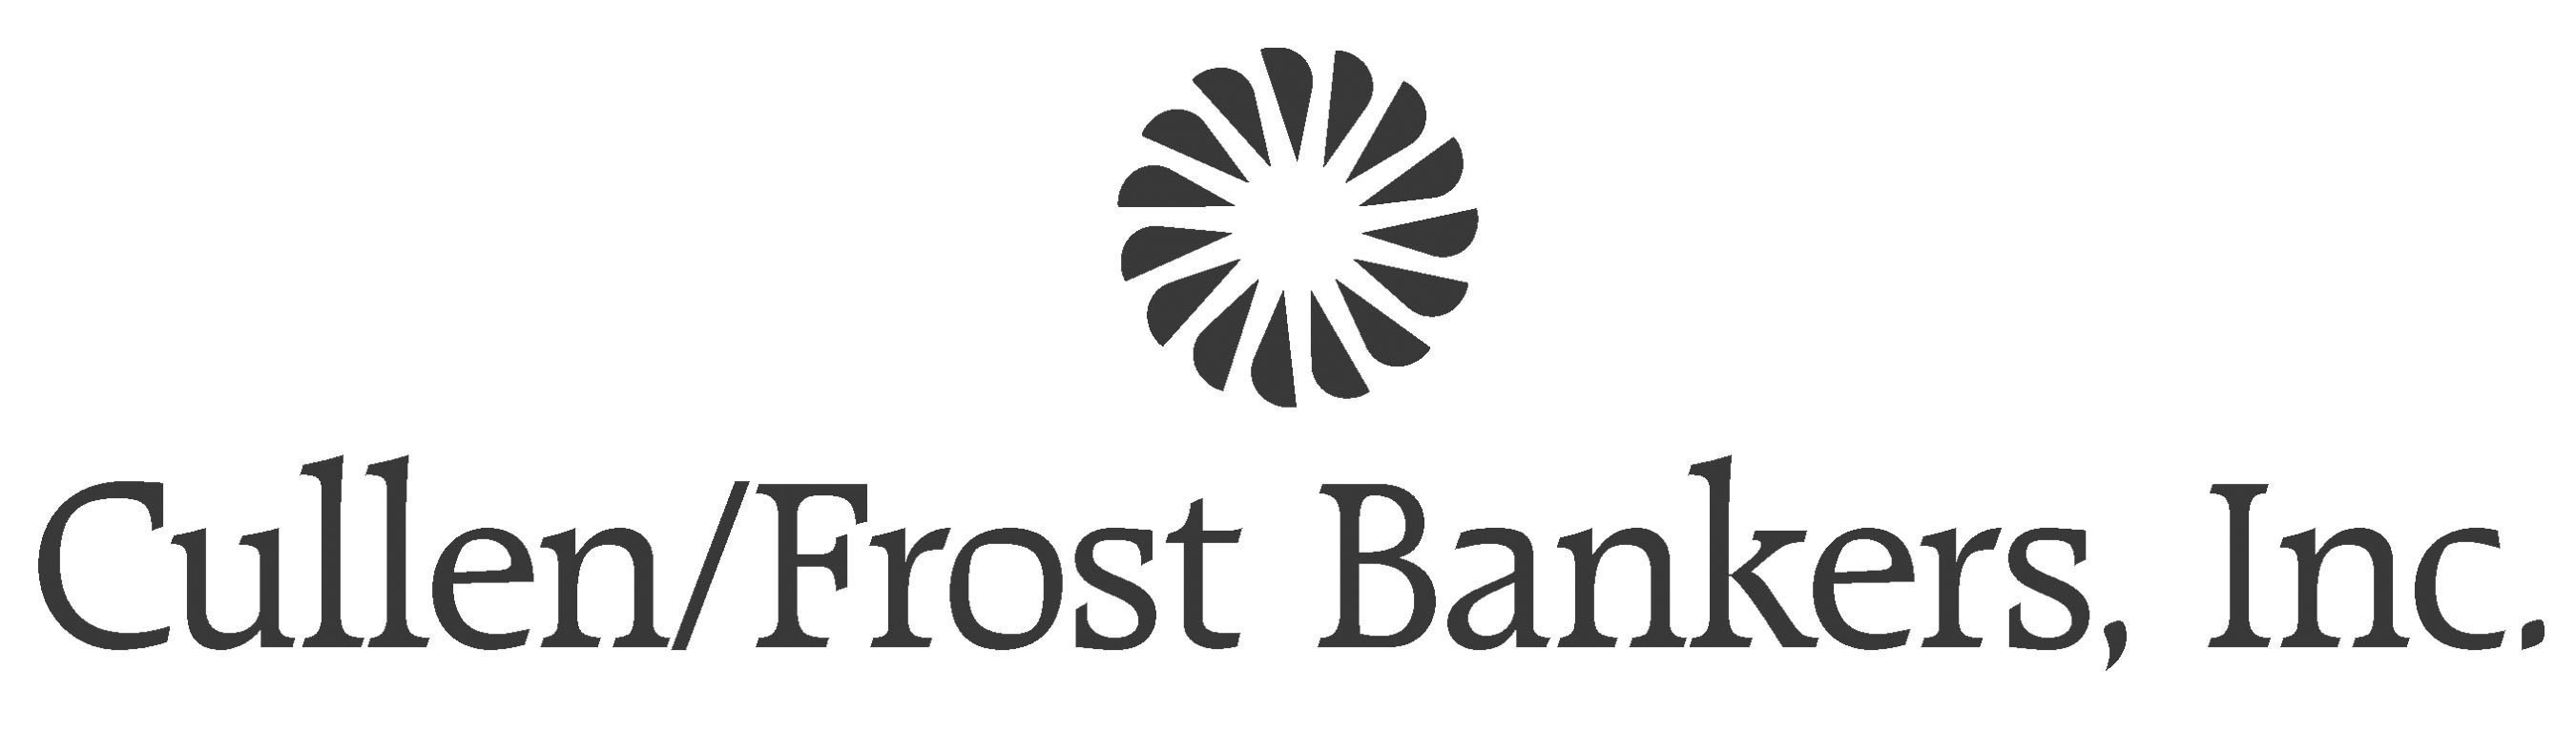 Cullen/Frost Bankers logo.